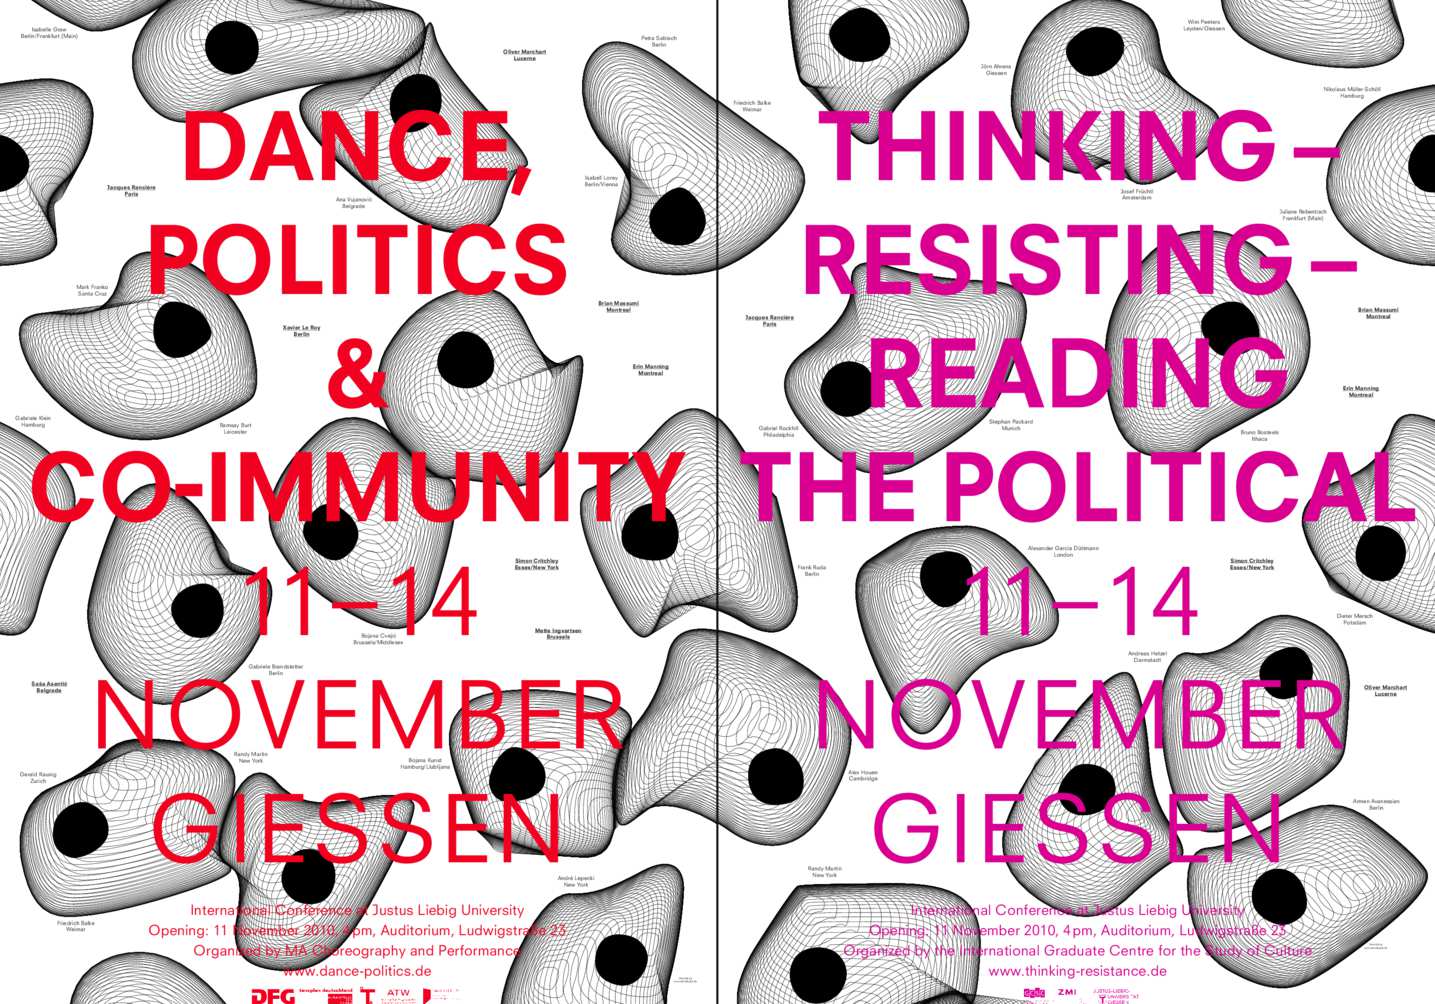 dance-politicsdance-politics-co-immunity-posters-repeat-00-1435x1004px